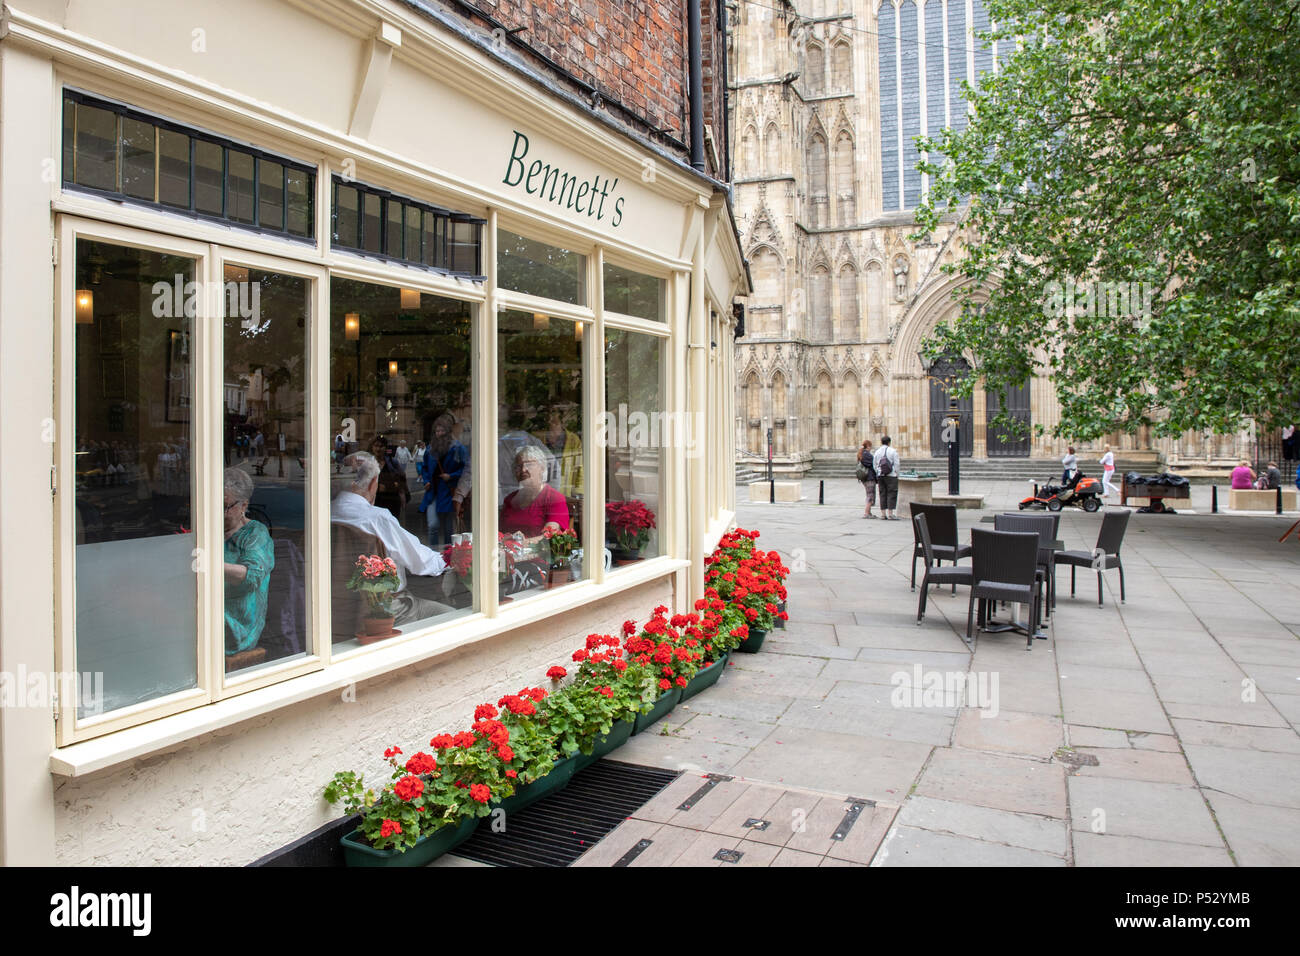 Bennett's Cafe & Bistro, York, Angleterre, Royaume-Uni. Banque D'Images